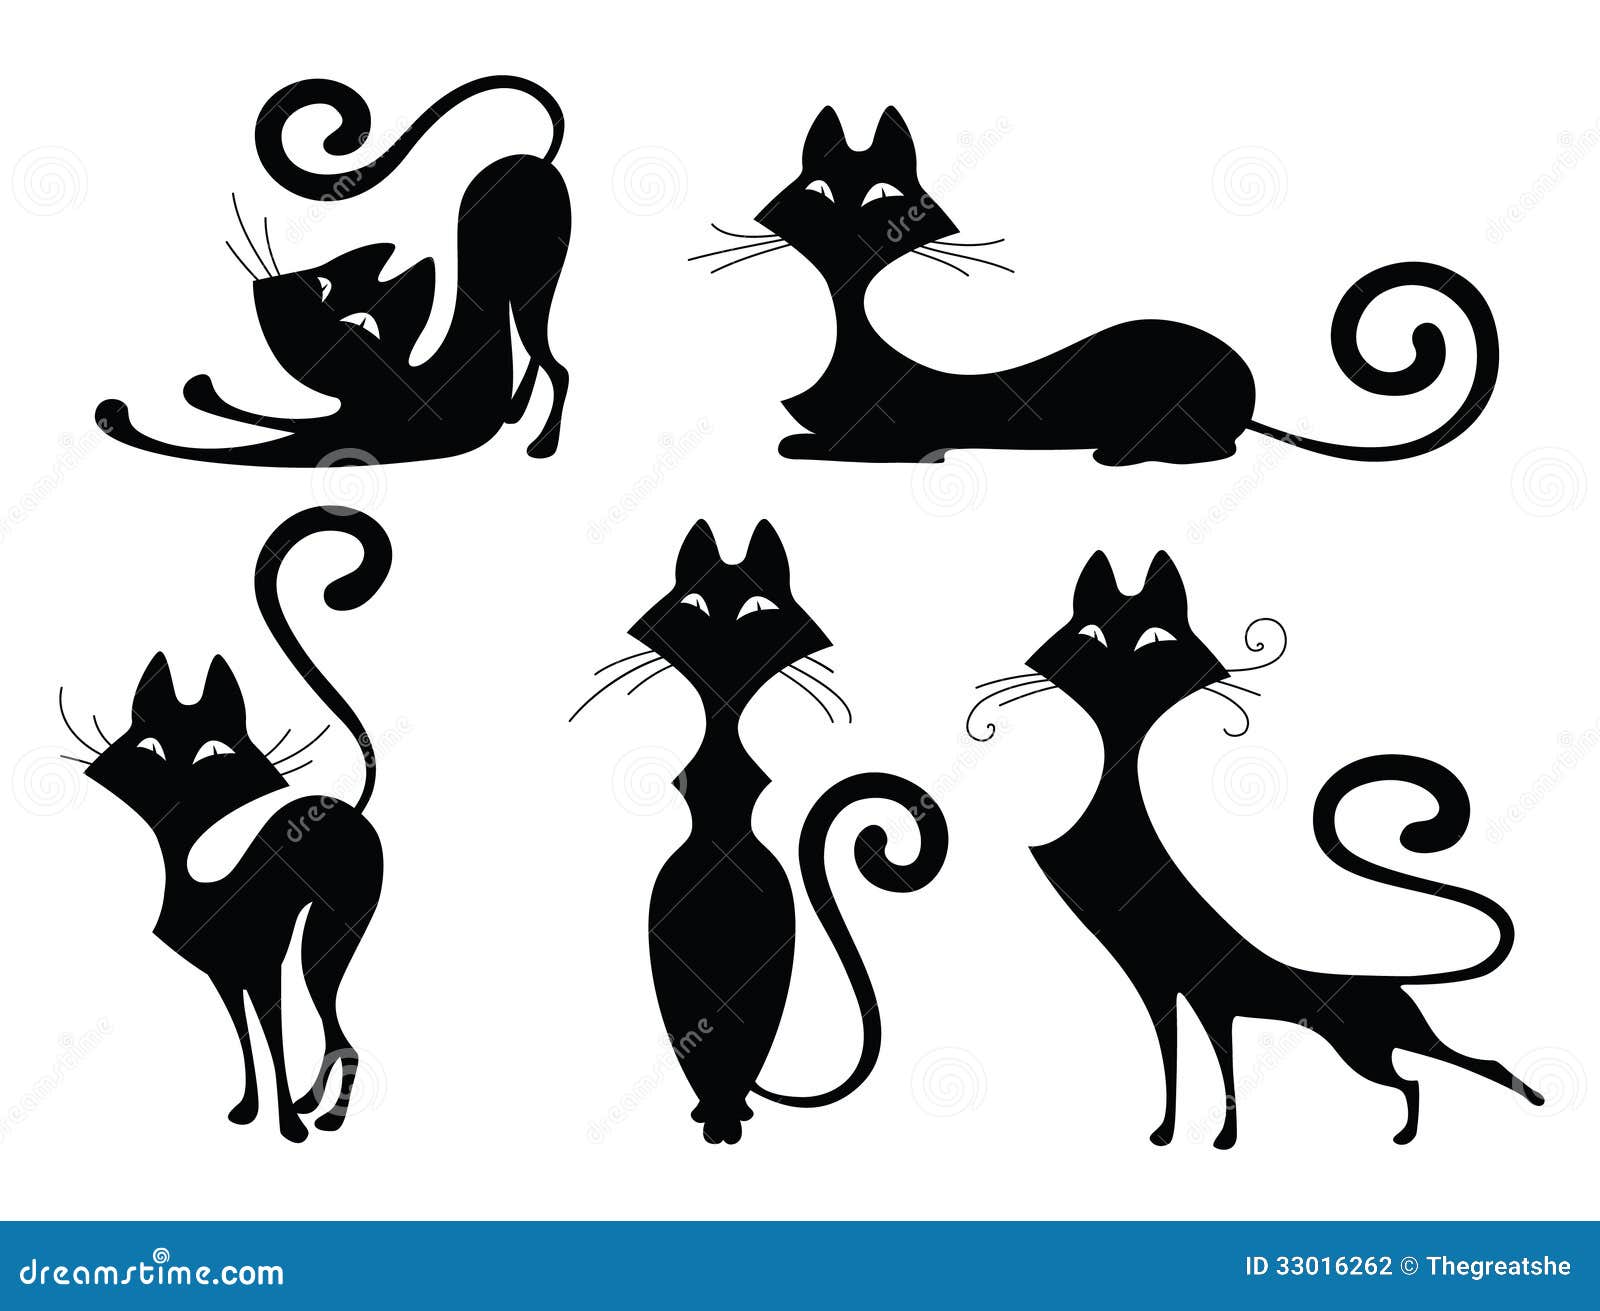 Set of cat silhouettes by Thegreatshe, via Dreamstime